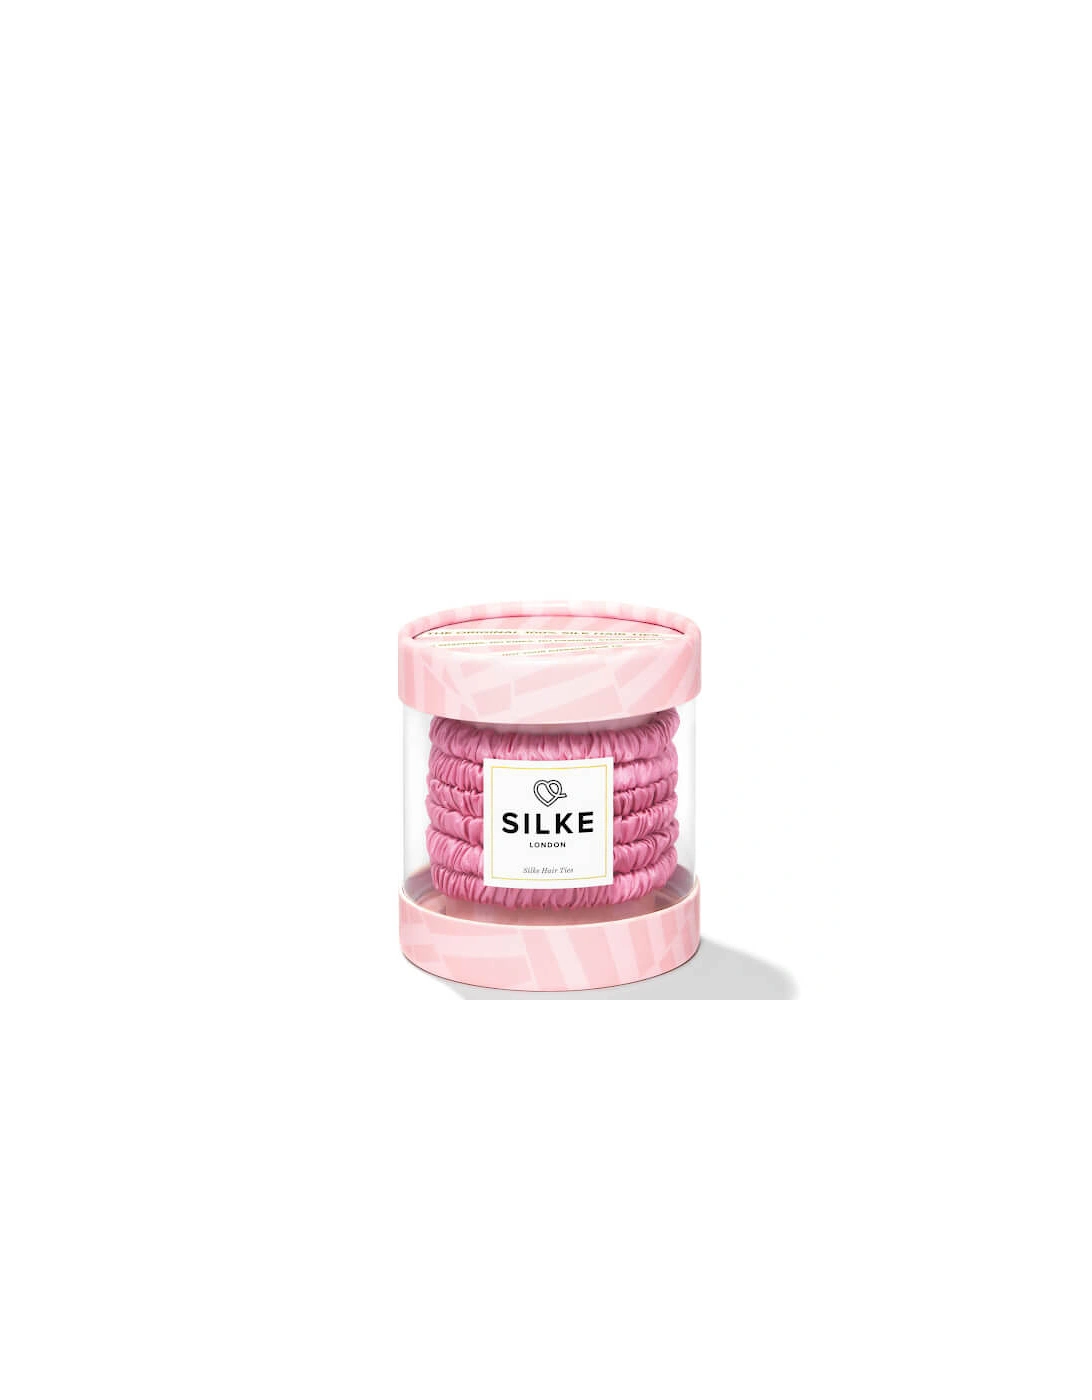 SILKE Hair Ties Blossom Powder - Pink, 2 of 1